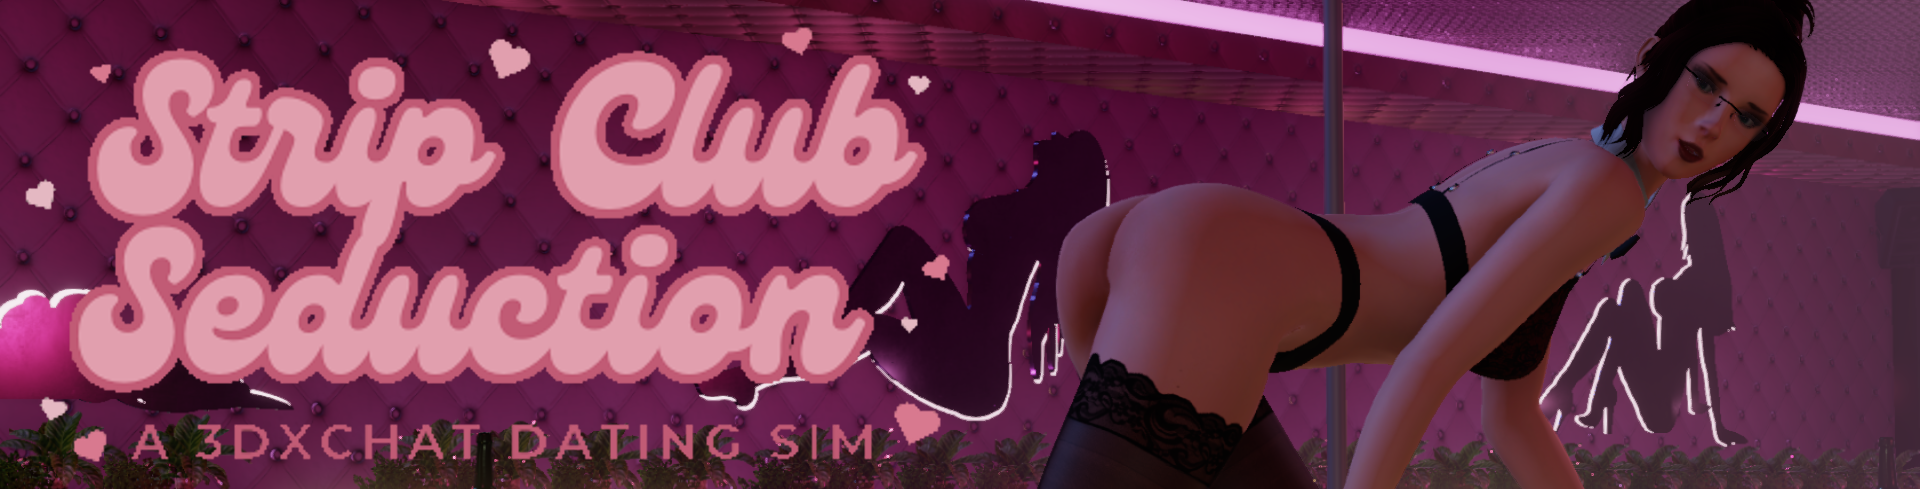 Strip Club Seduction: A 3DXChat Dating Sim